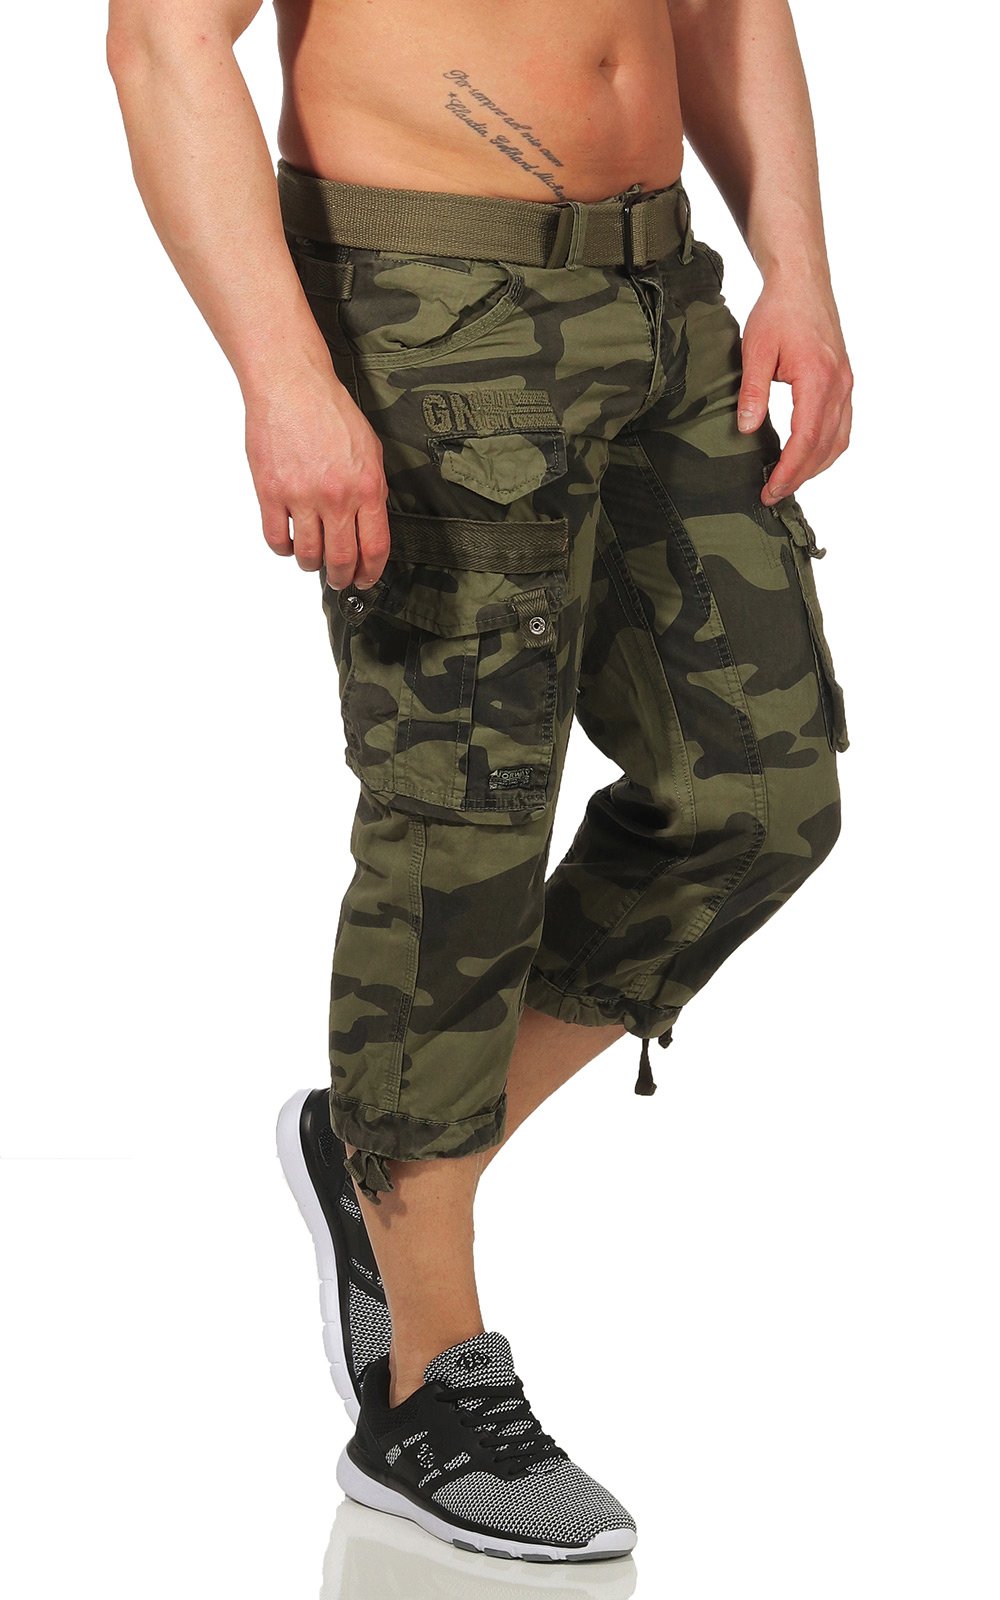 Herren Cargo Shorts Kurze Capri Hose Bermuda Hose Camouflage Army Camo Cargohose 